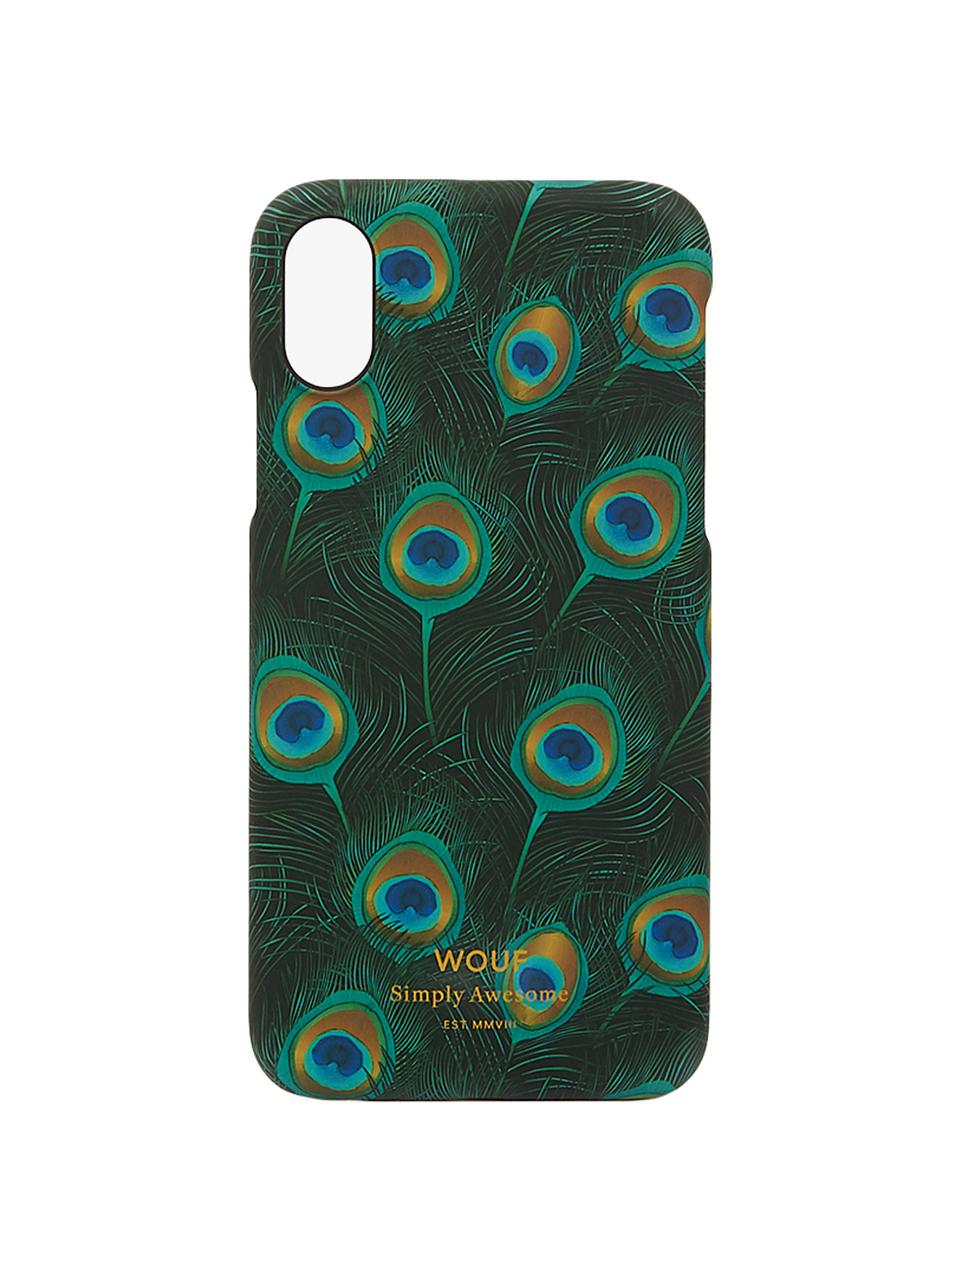 Coque Peacock pour iPhone X, Multicolore